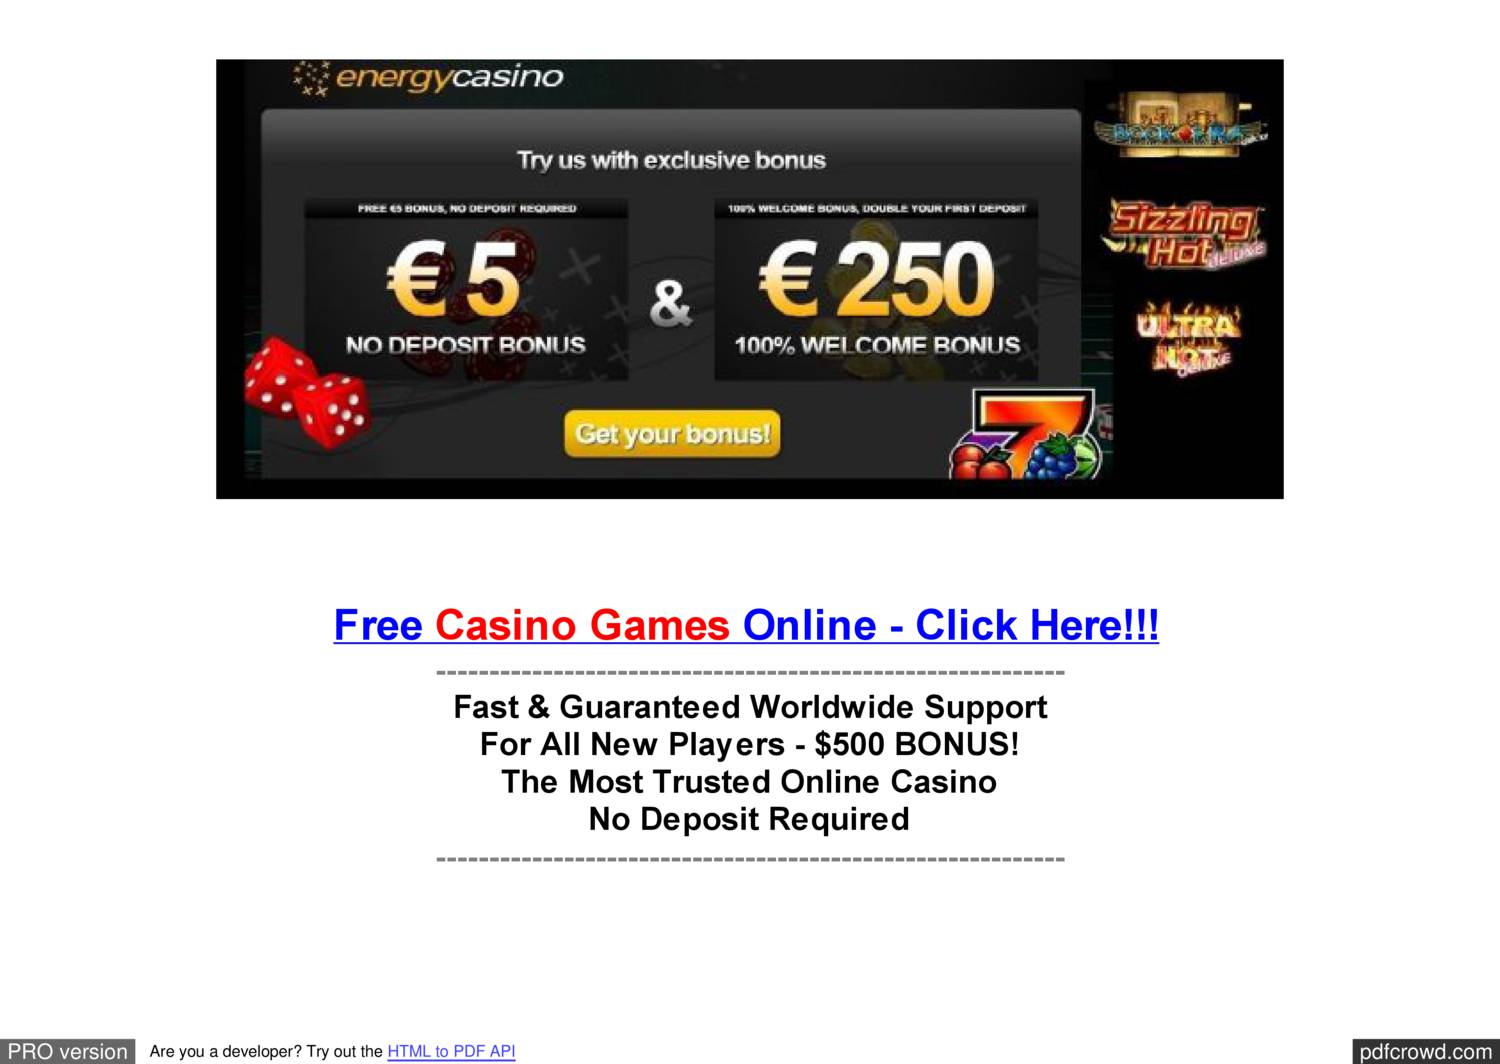 slots iv casino no deposit bonus codes